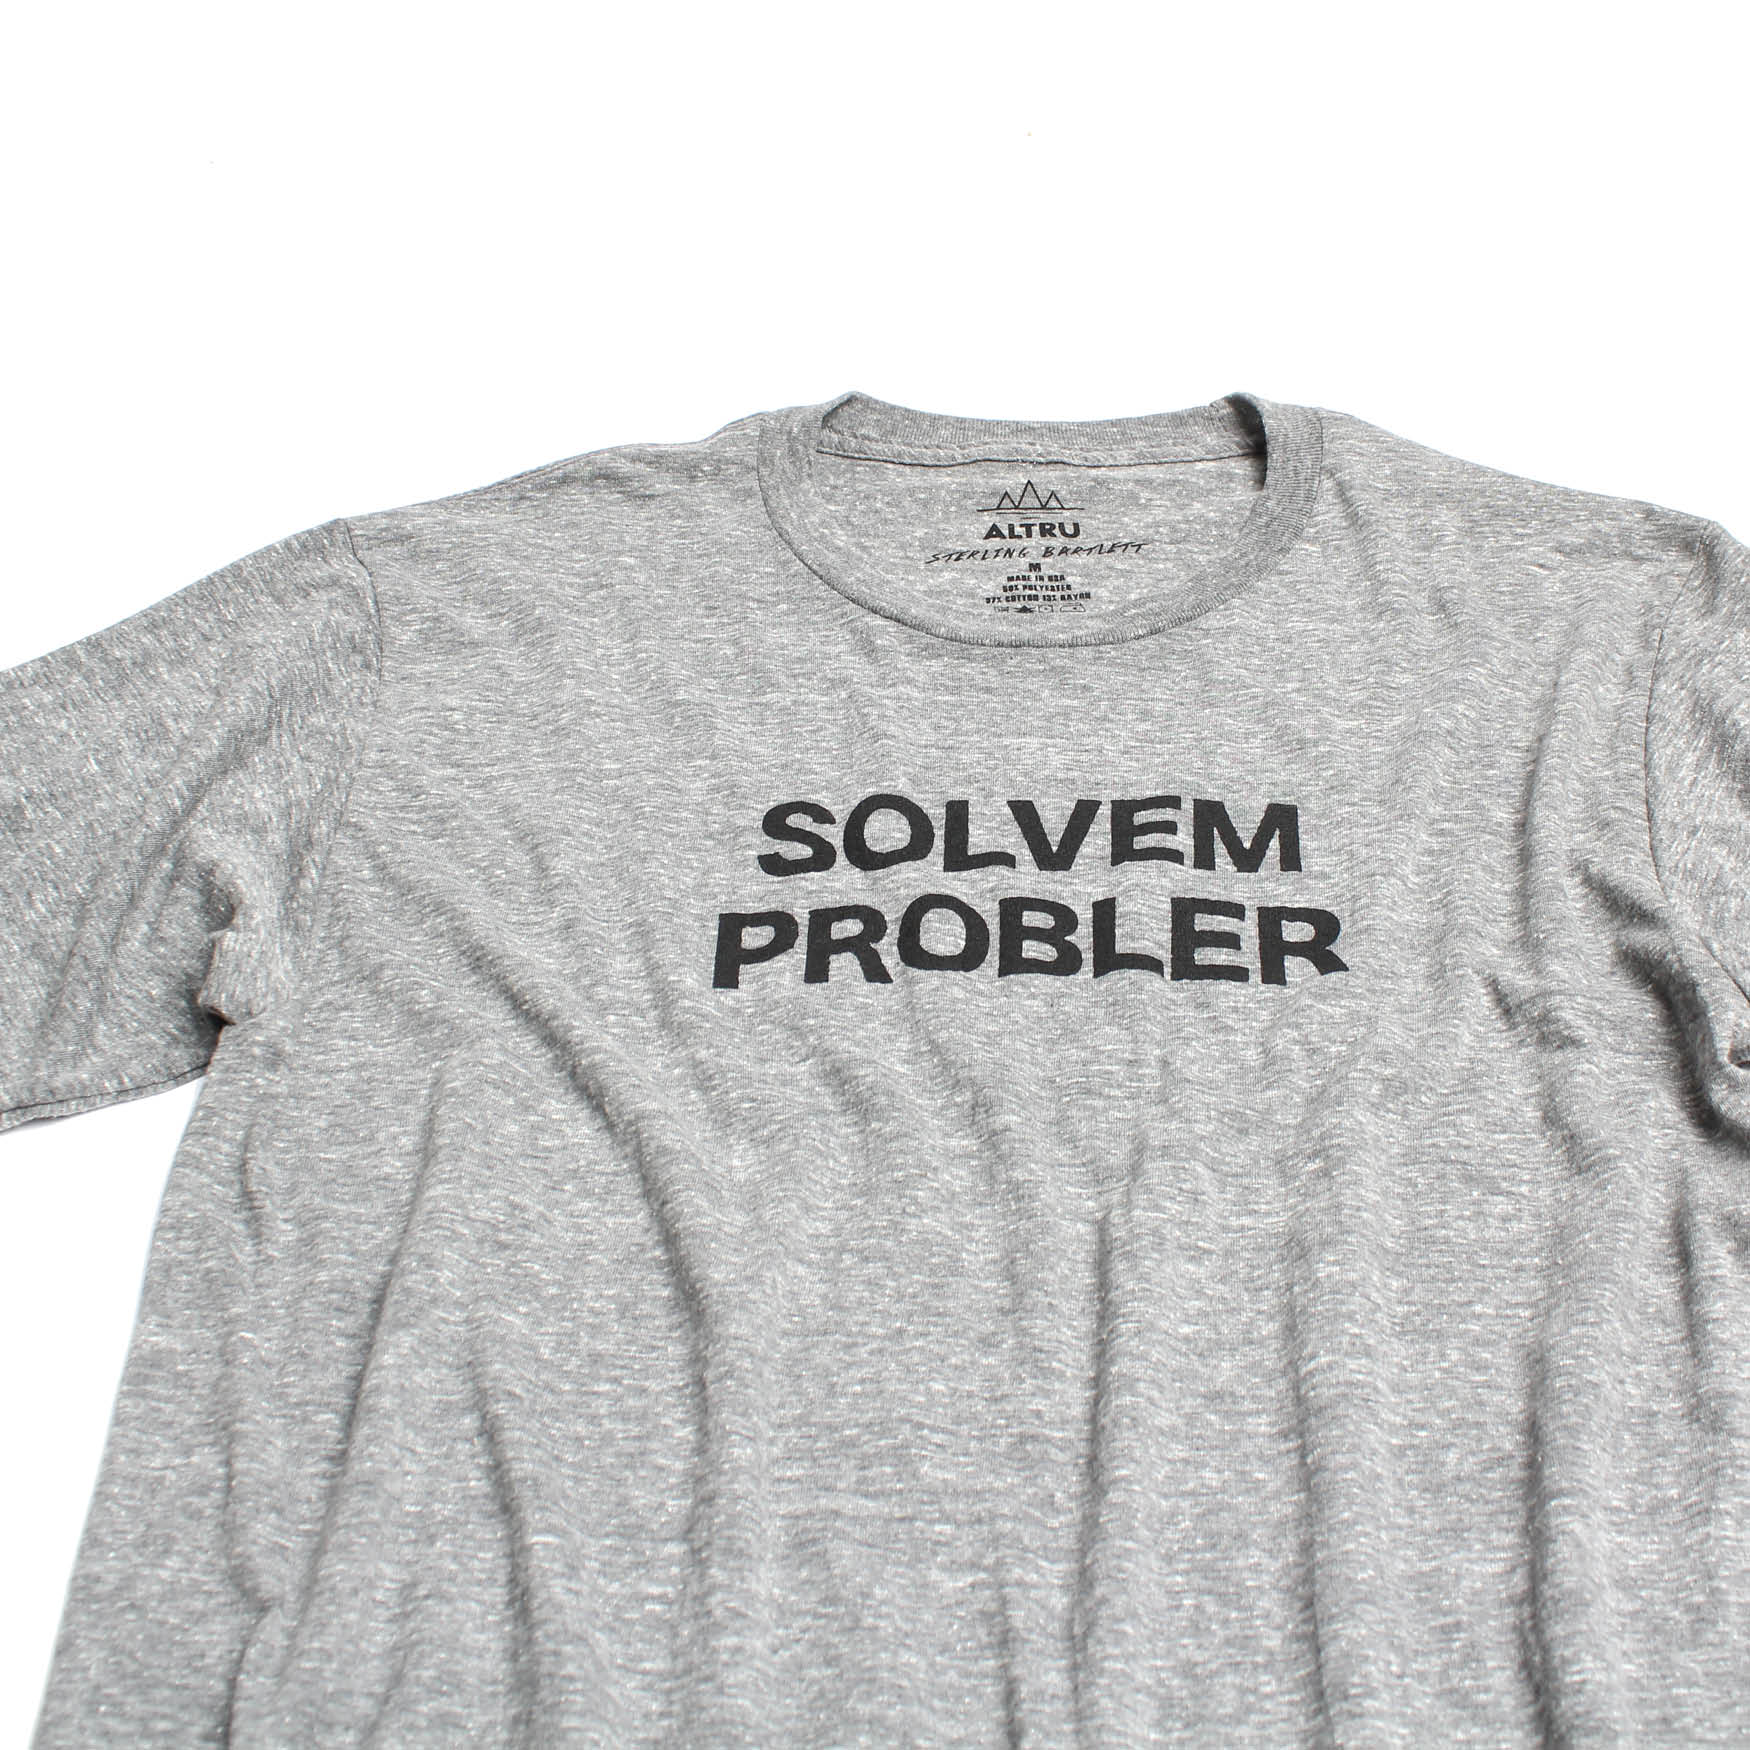 Solvem Probler Mens Tri-Blend Graphic Tee (It's spelled wrong...get it?)